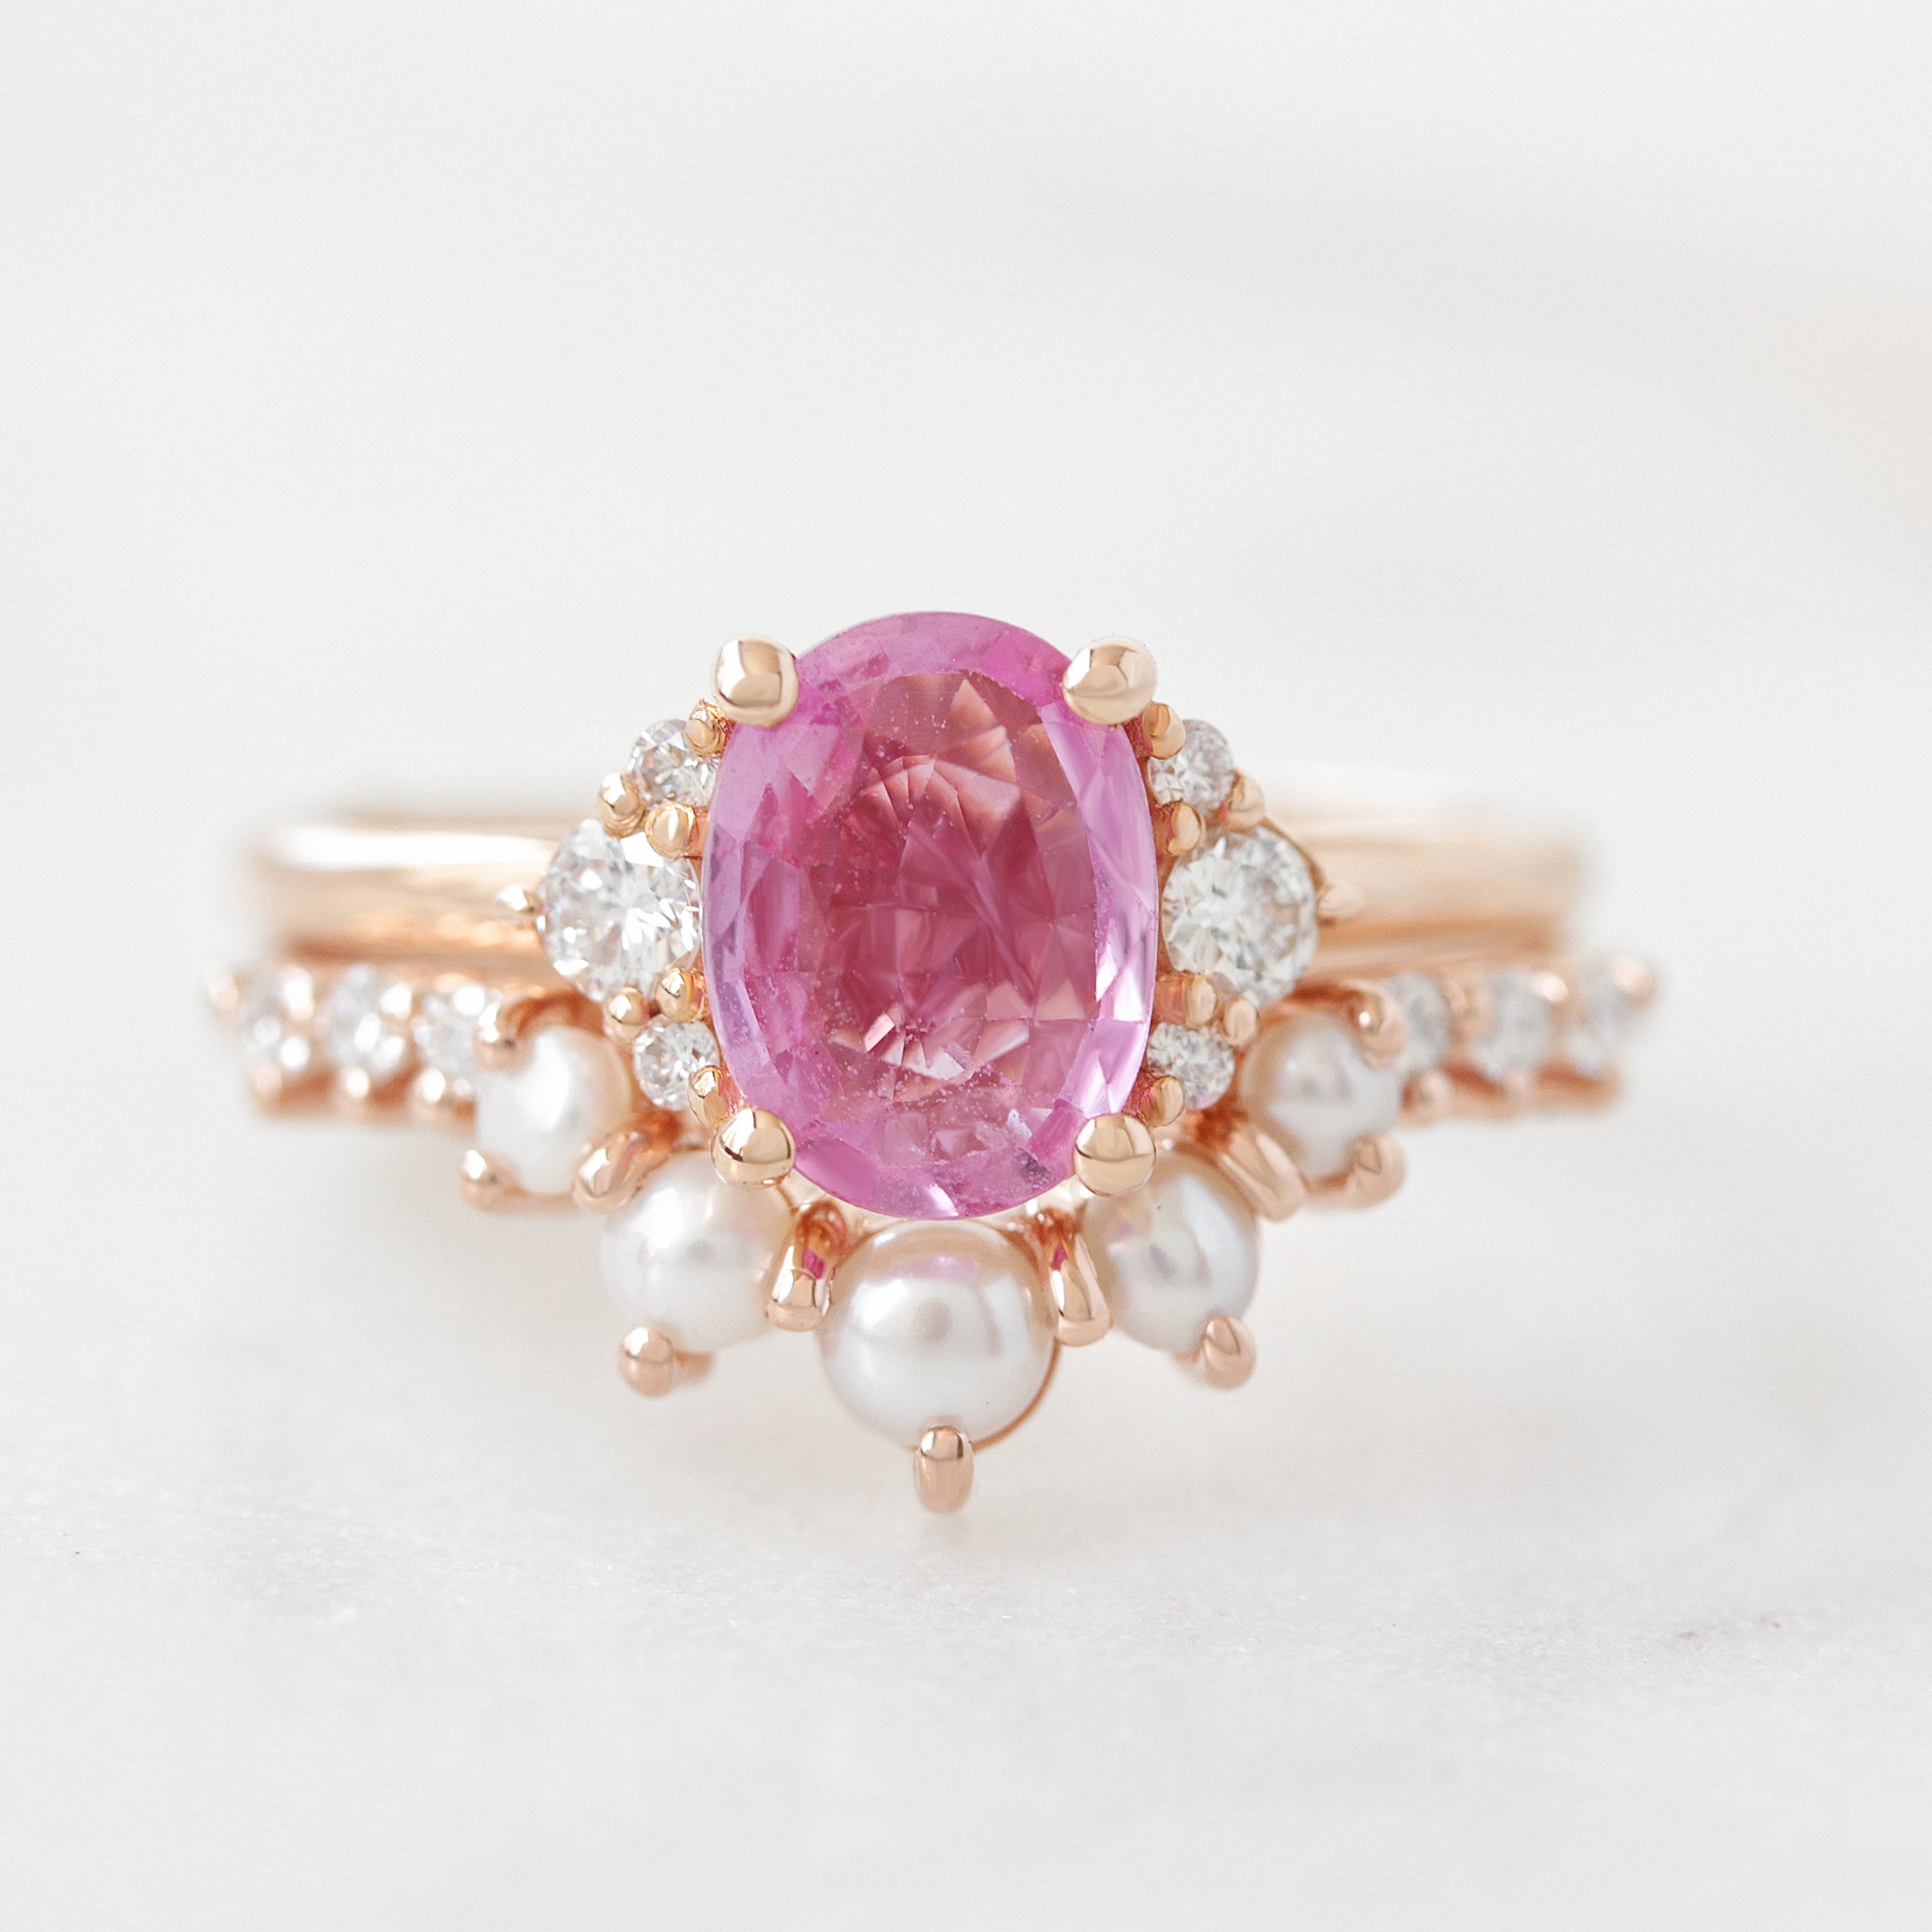 Oval vivid pink sapphire & diamonds ring, rose gold, “Isabella” . RTS